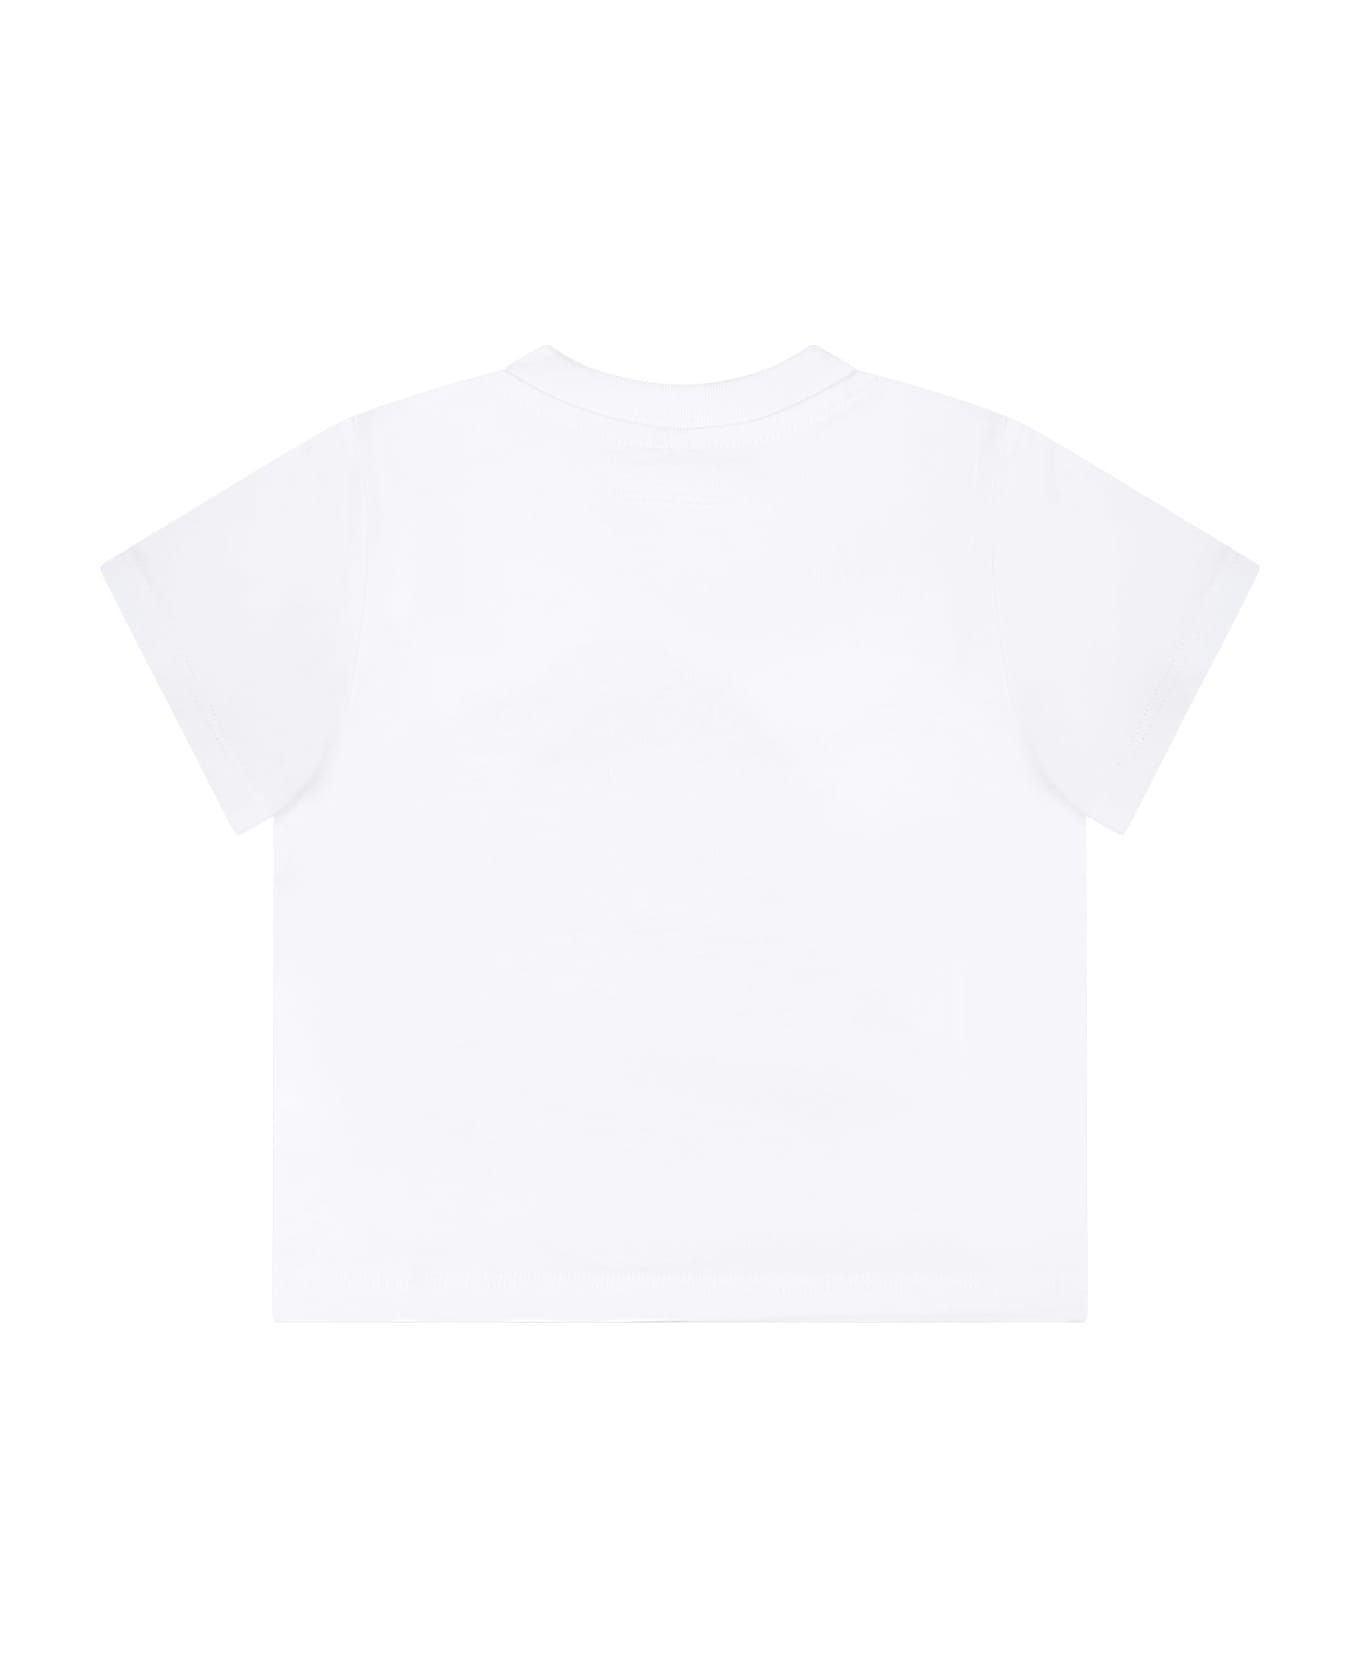 Stella McCartney Kids White T-shirt For Baby Boy With Shark Print - Avorio